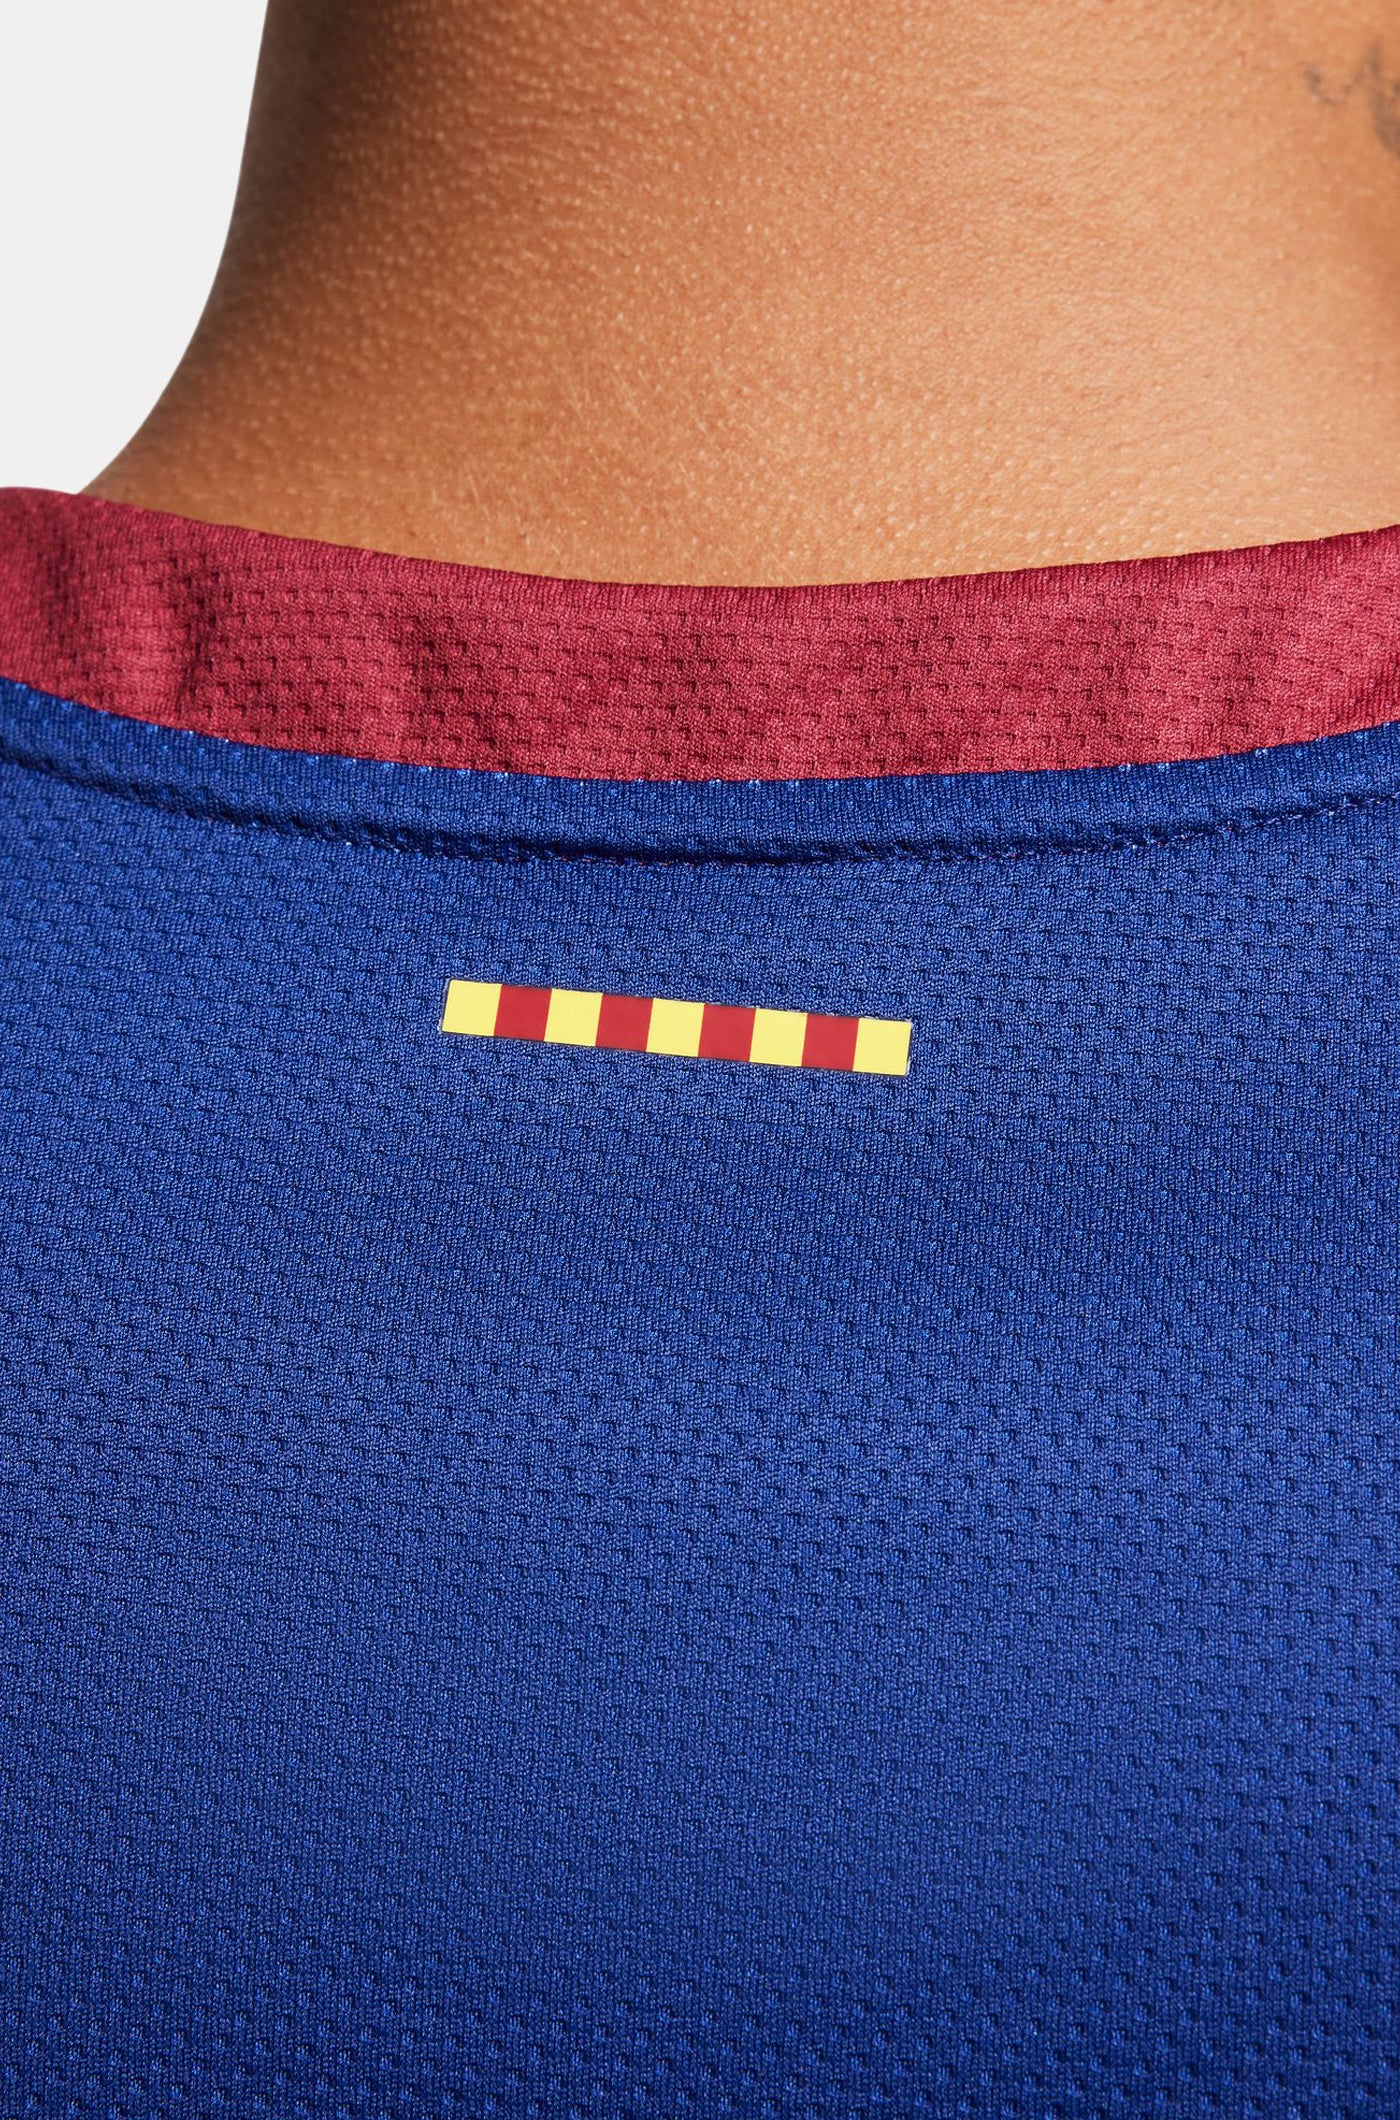 Euroleague FC Barcelona home basketball shirt 23/24 - KALINIC